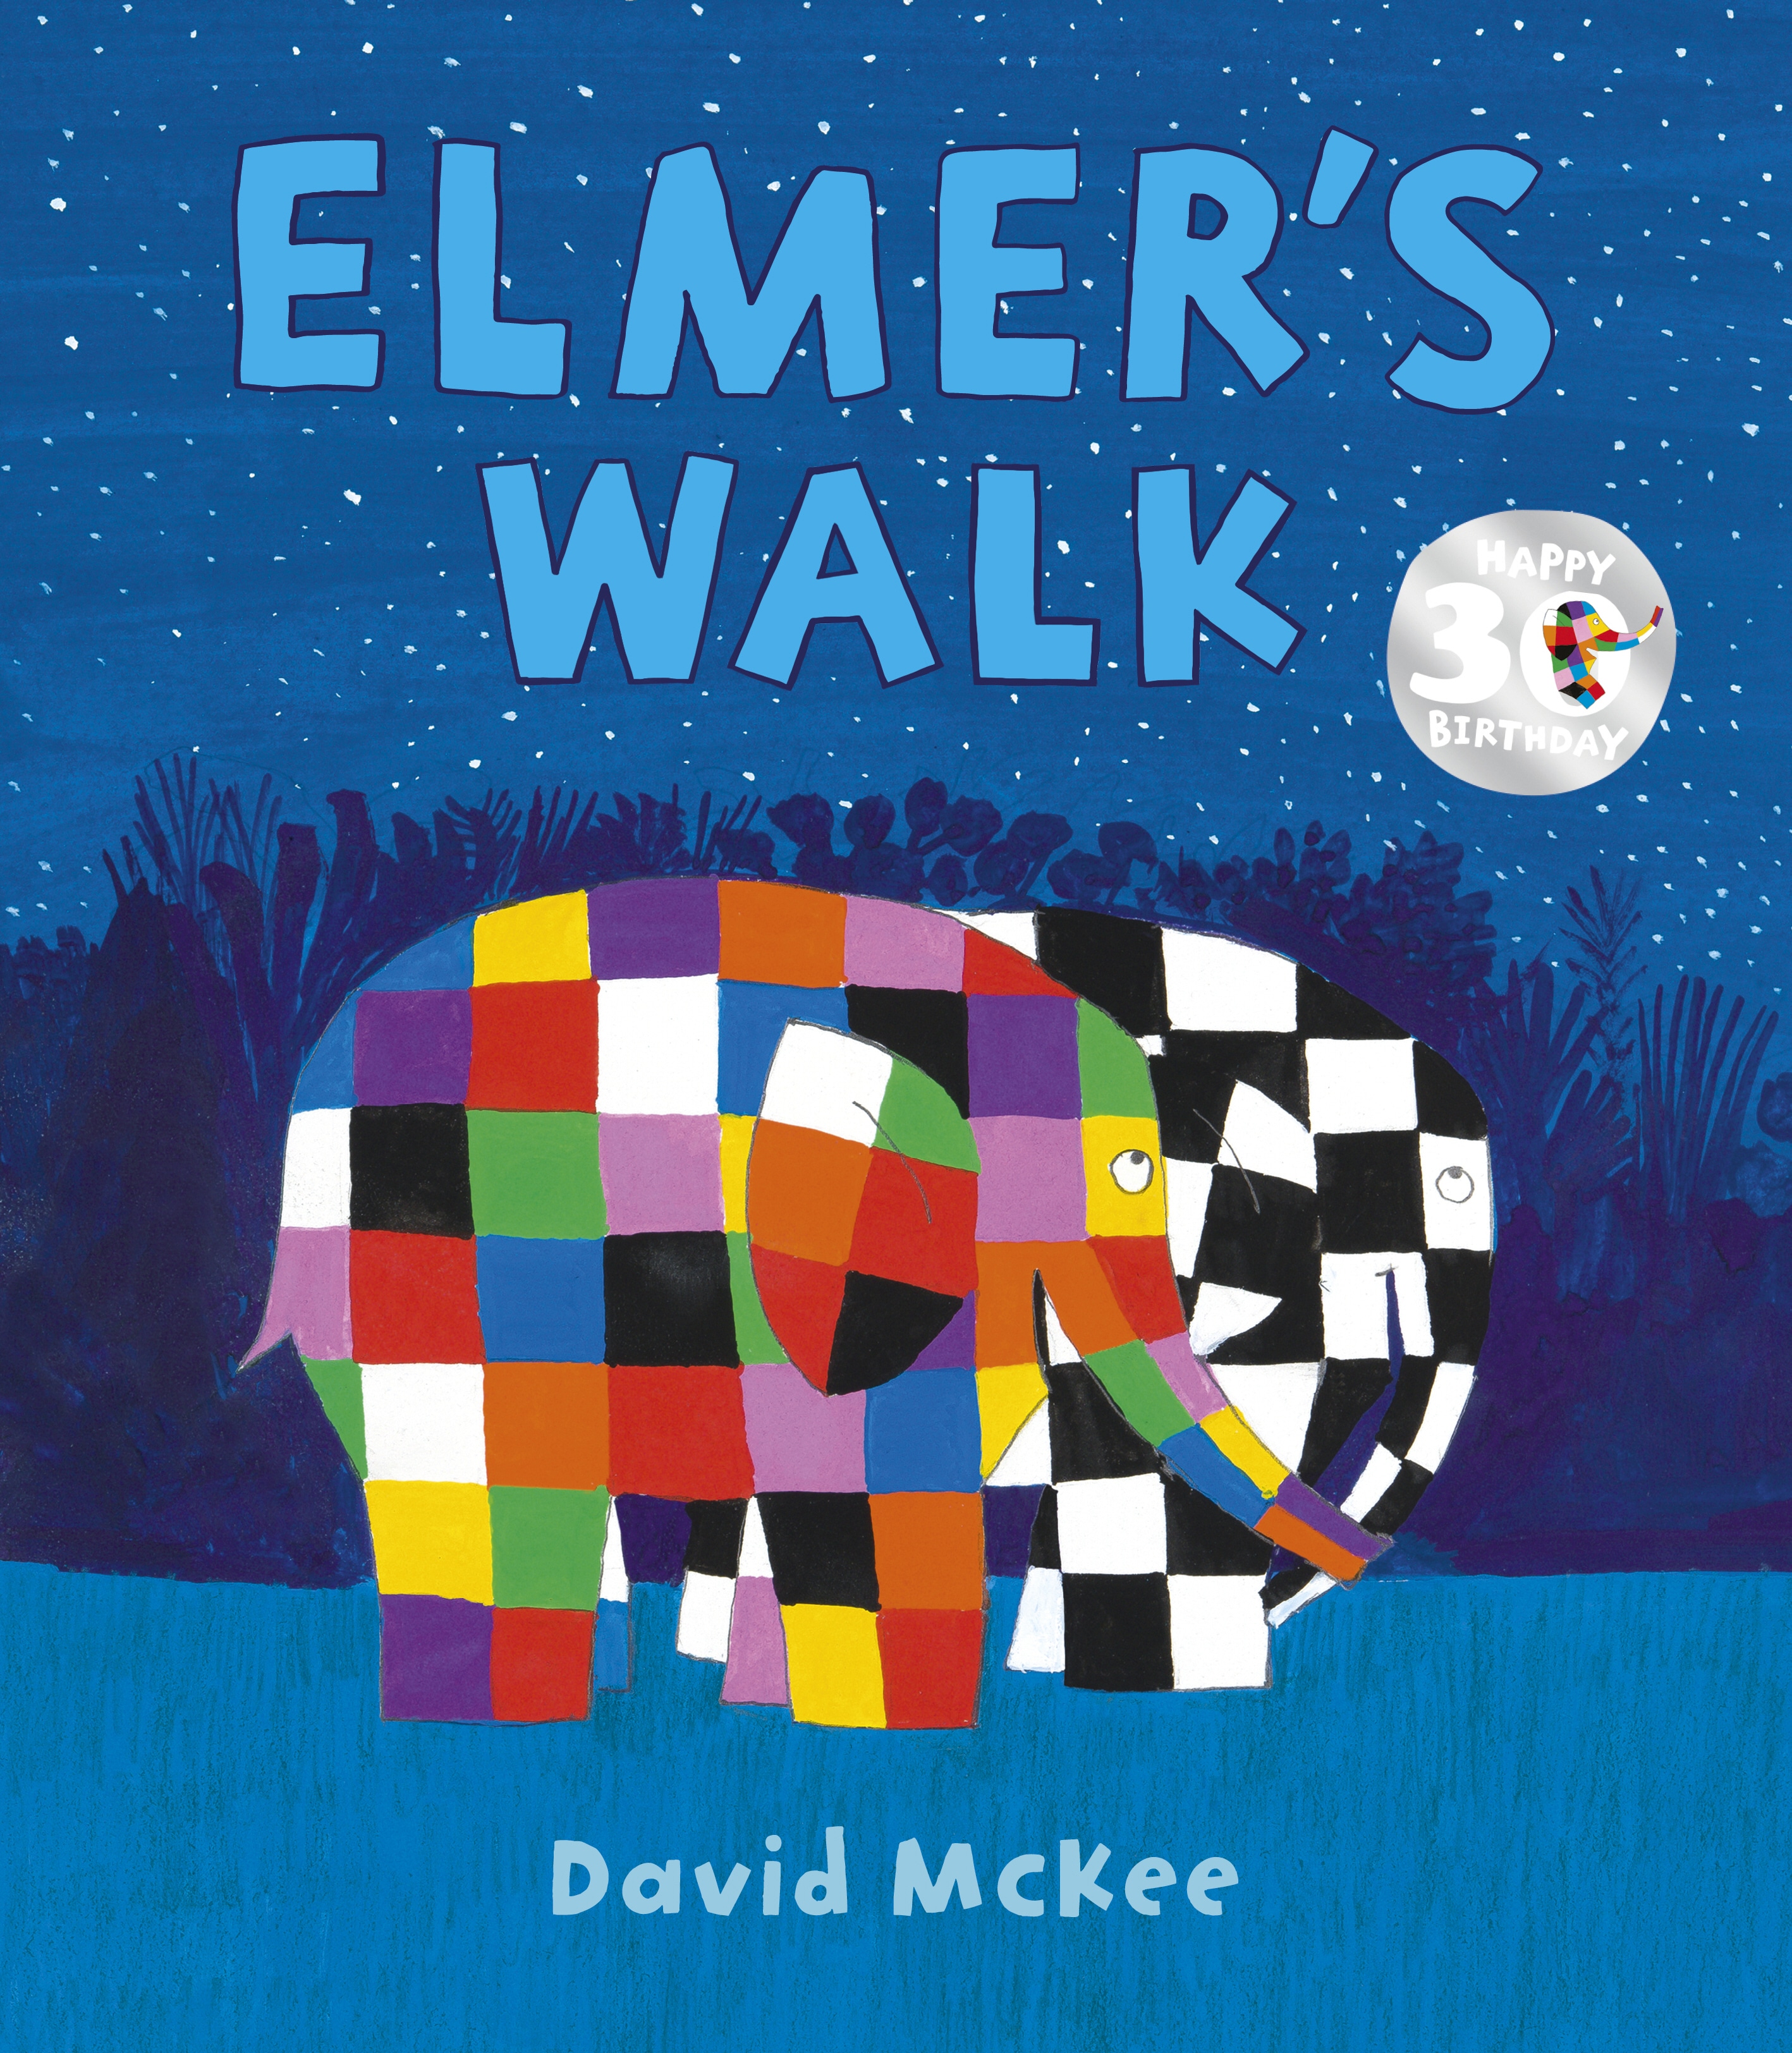 Book “Elmer's Walk” by David McKee — May 2, 2019